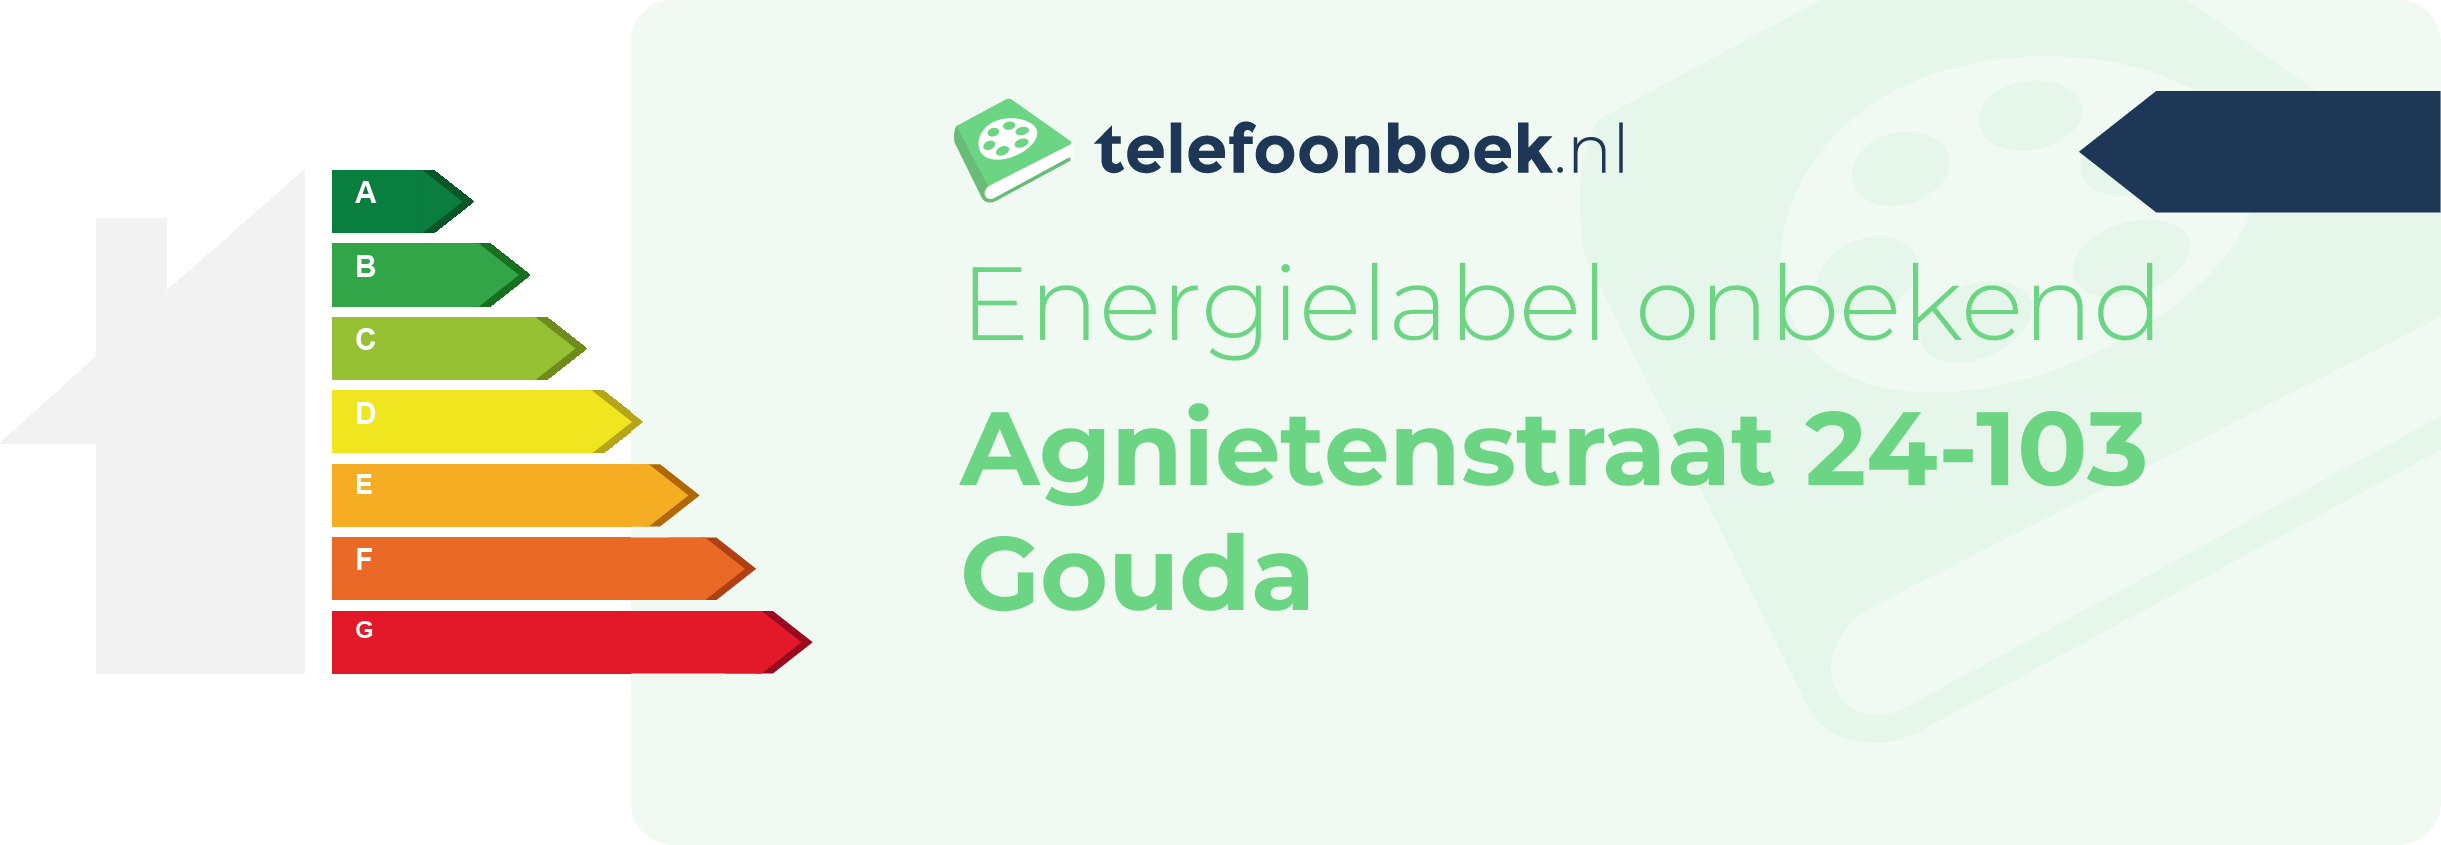 Energielabel Agnietenstraat 24-103 Gouda